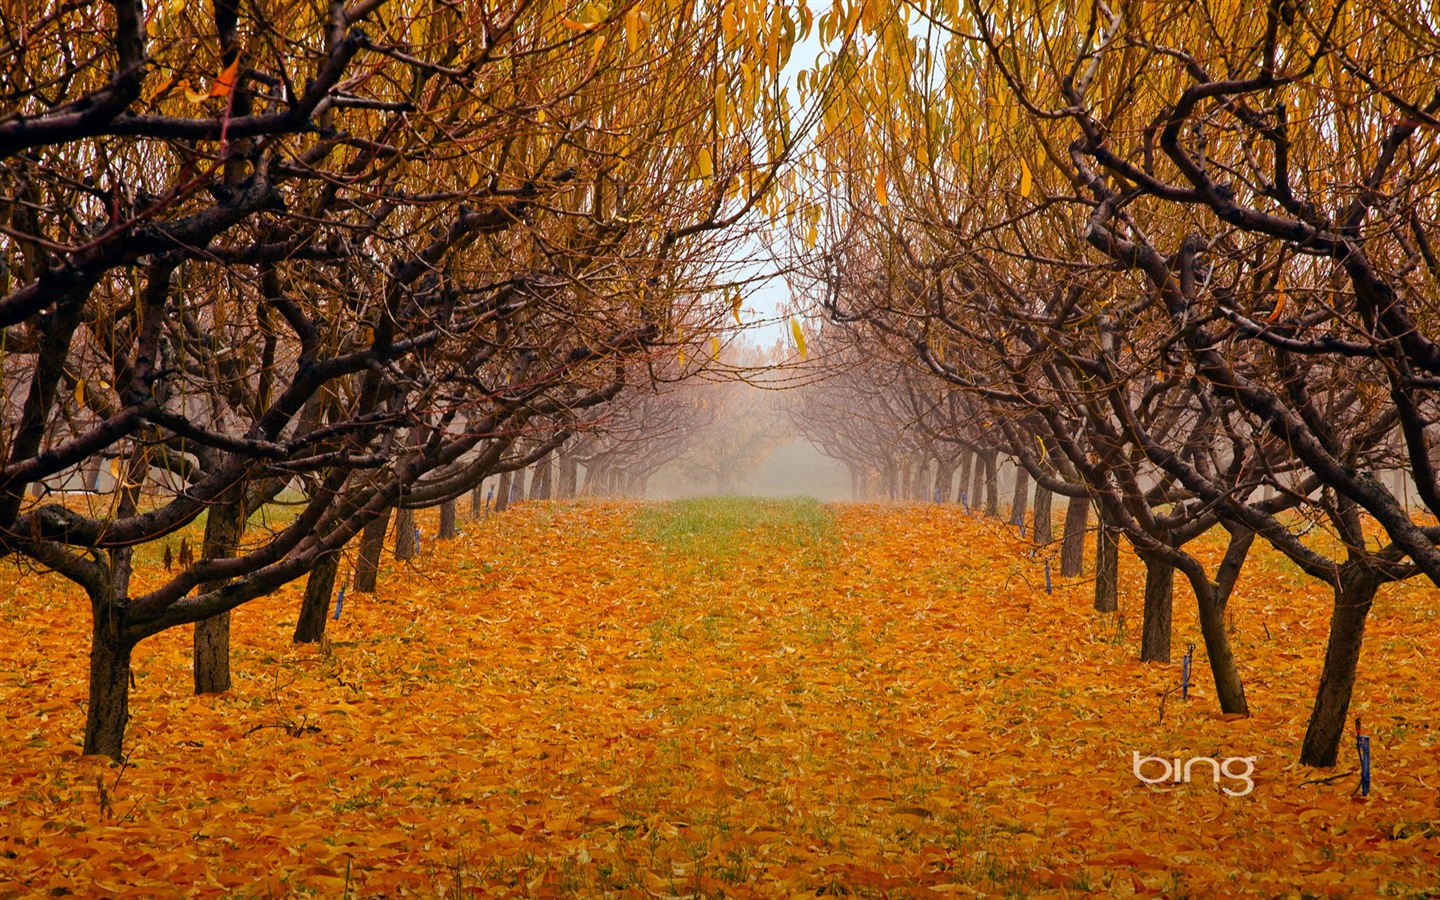 2013 Bing Herbst Landschaften, Tiere, urban HD Wallpaper #28 - 1440x900